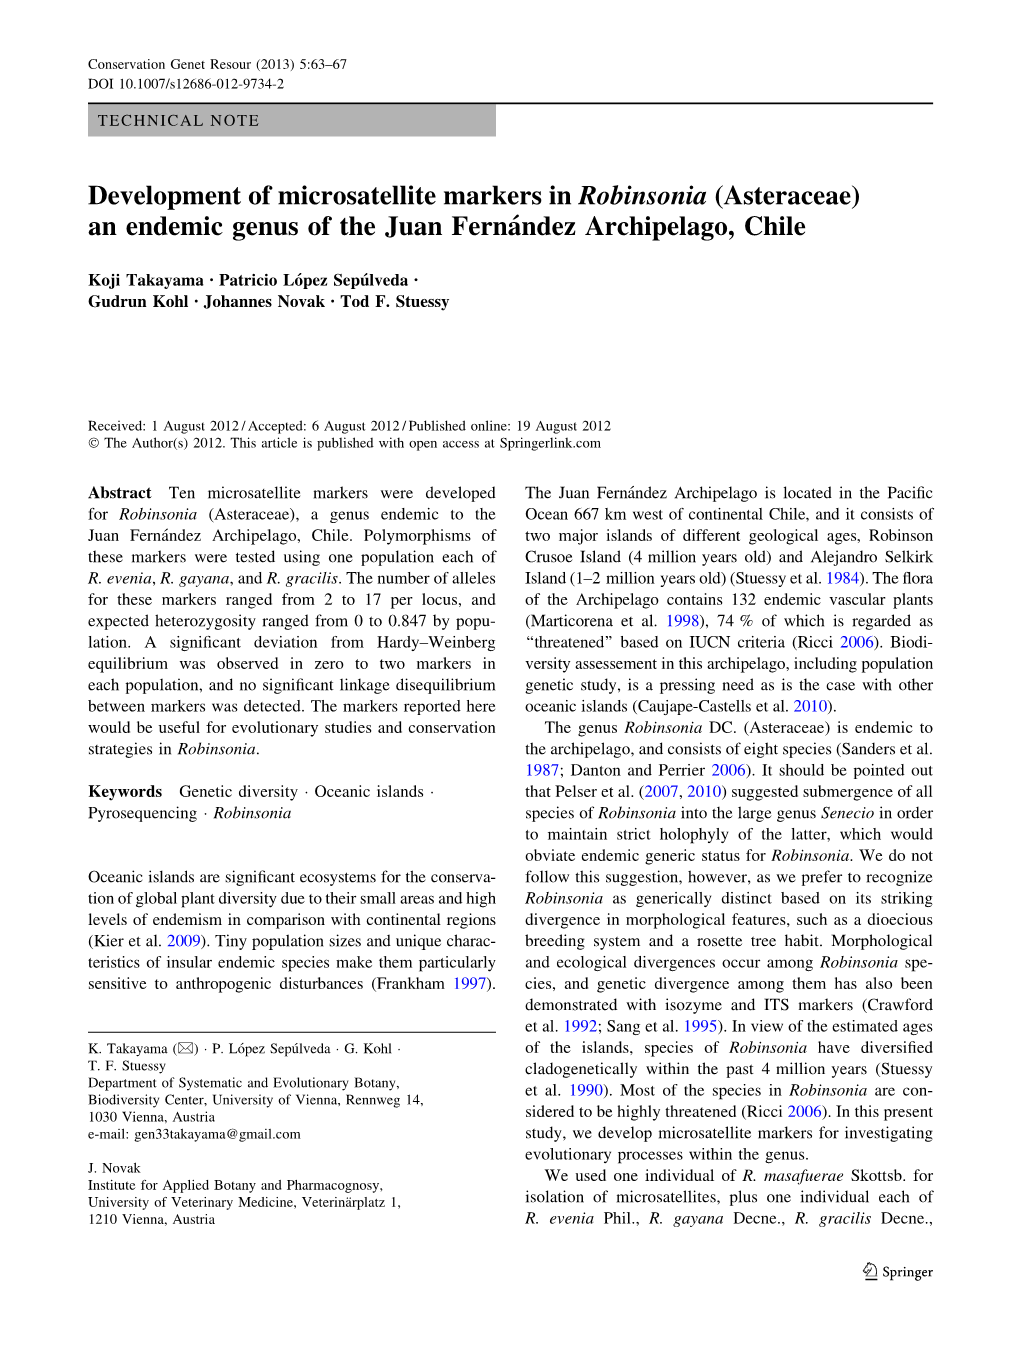 Development of Microsatellite Markers in Robinsonia (Asteraceae) an Endemic Genus of the Juan Ferna´Ndez Archipelago, Chile